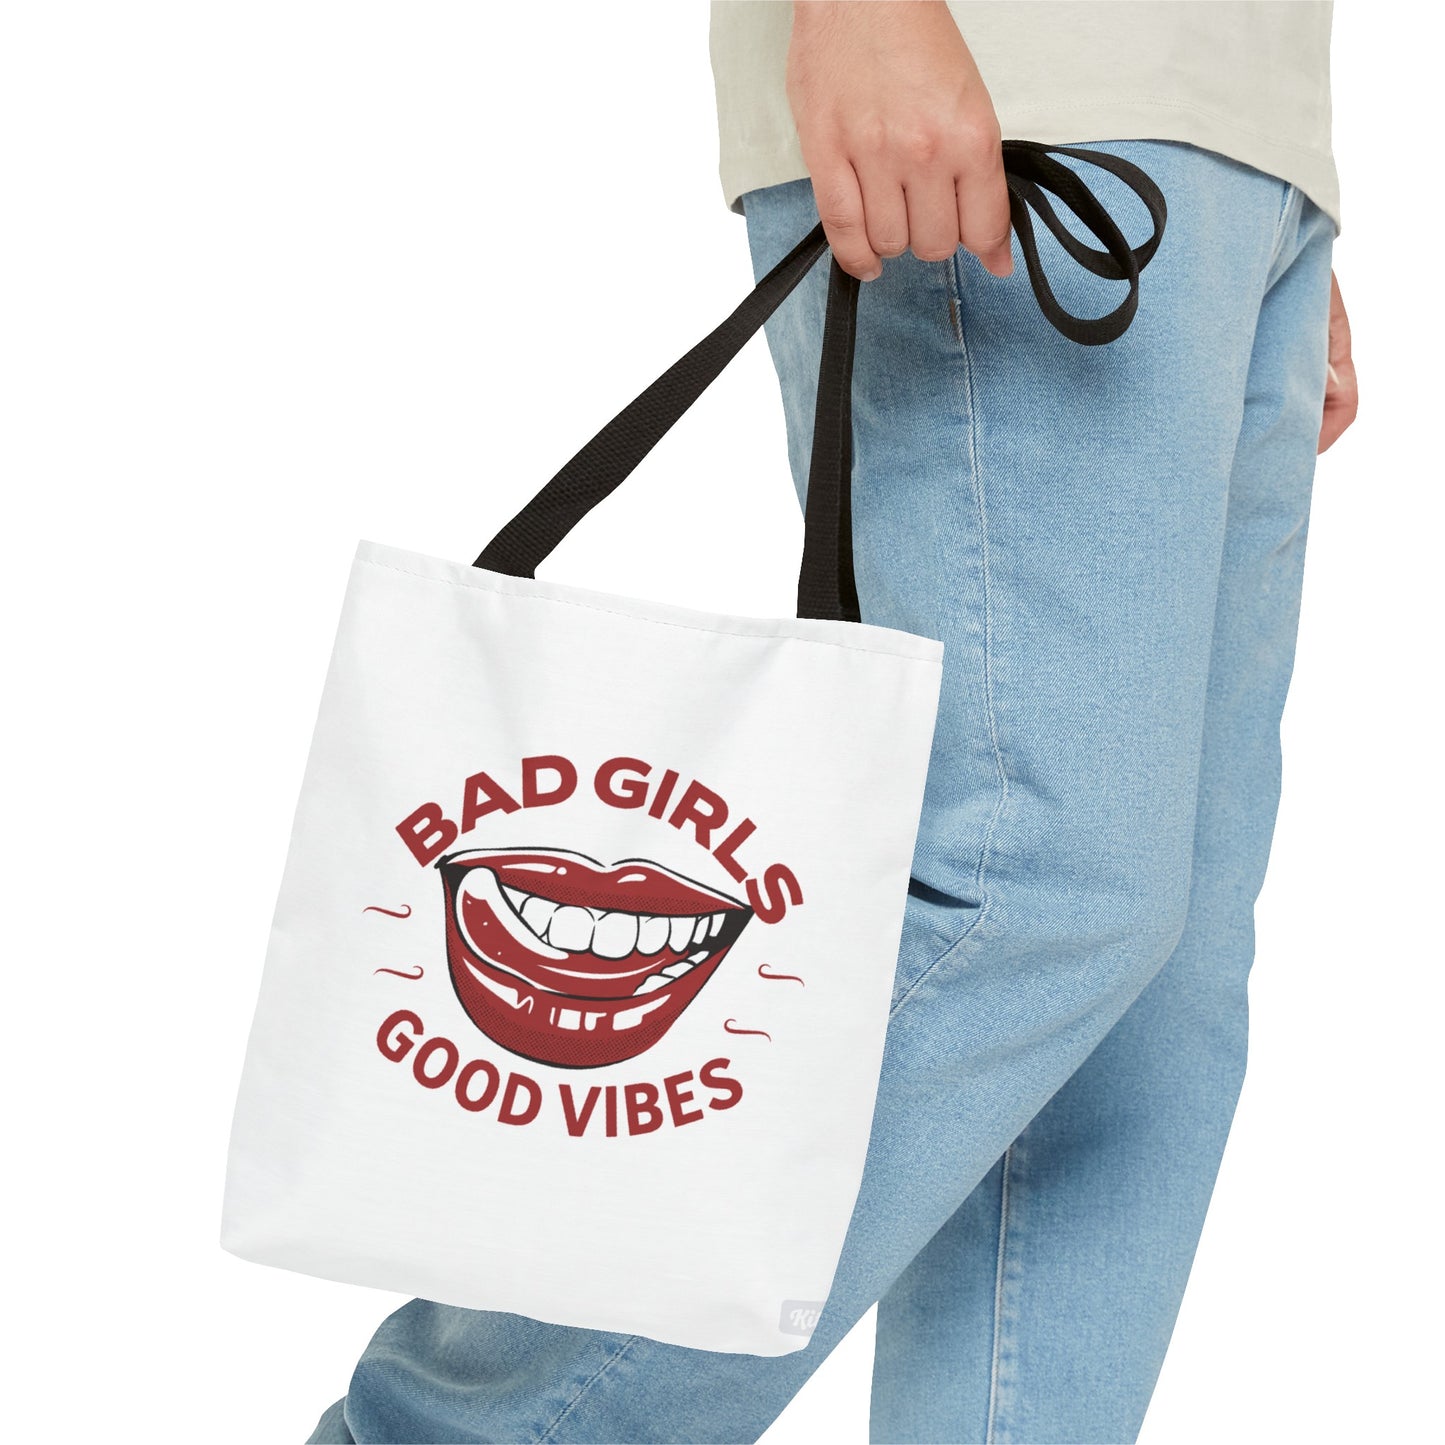 Soulbond Bad Girls Good Vibes tote bag